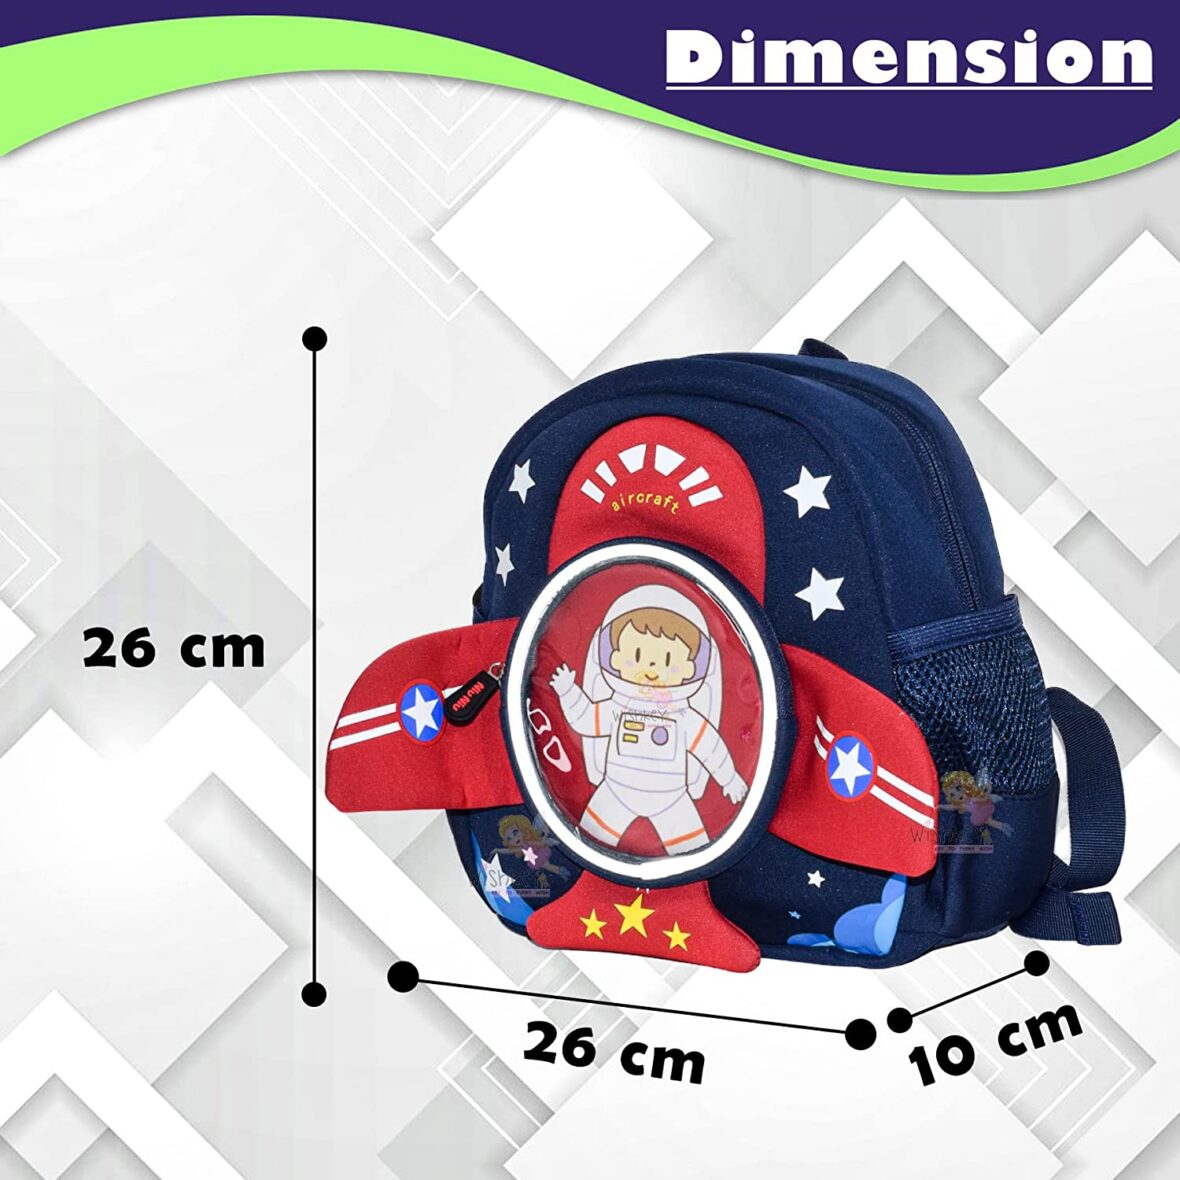 U Smile Space Design Bag for Pre-Schoolers Kids, Water Resistant Mini Backpack for Kids, Lightweight Small Size Bag for Play School & Nursery Kids, Picnic Bag, Travel, Dark Blue, 1-4 Years 2